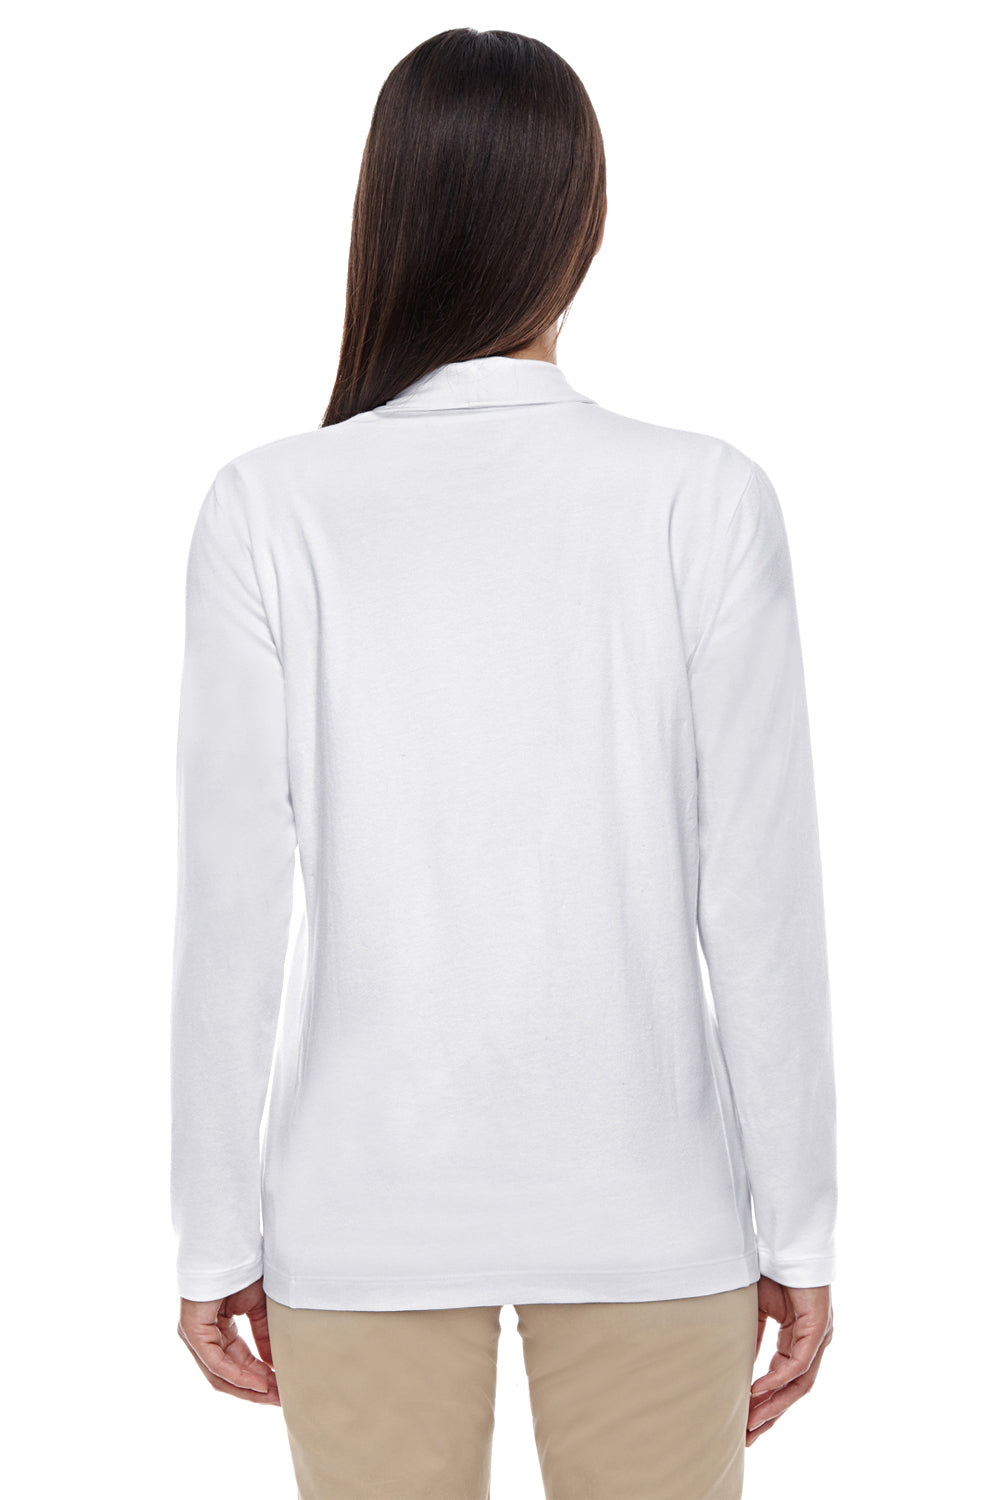 Devon & Jones DP462W Womens Perfect Fit Cardigan Sweater White Back